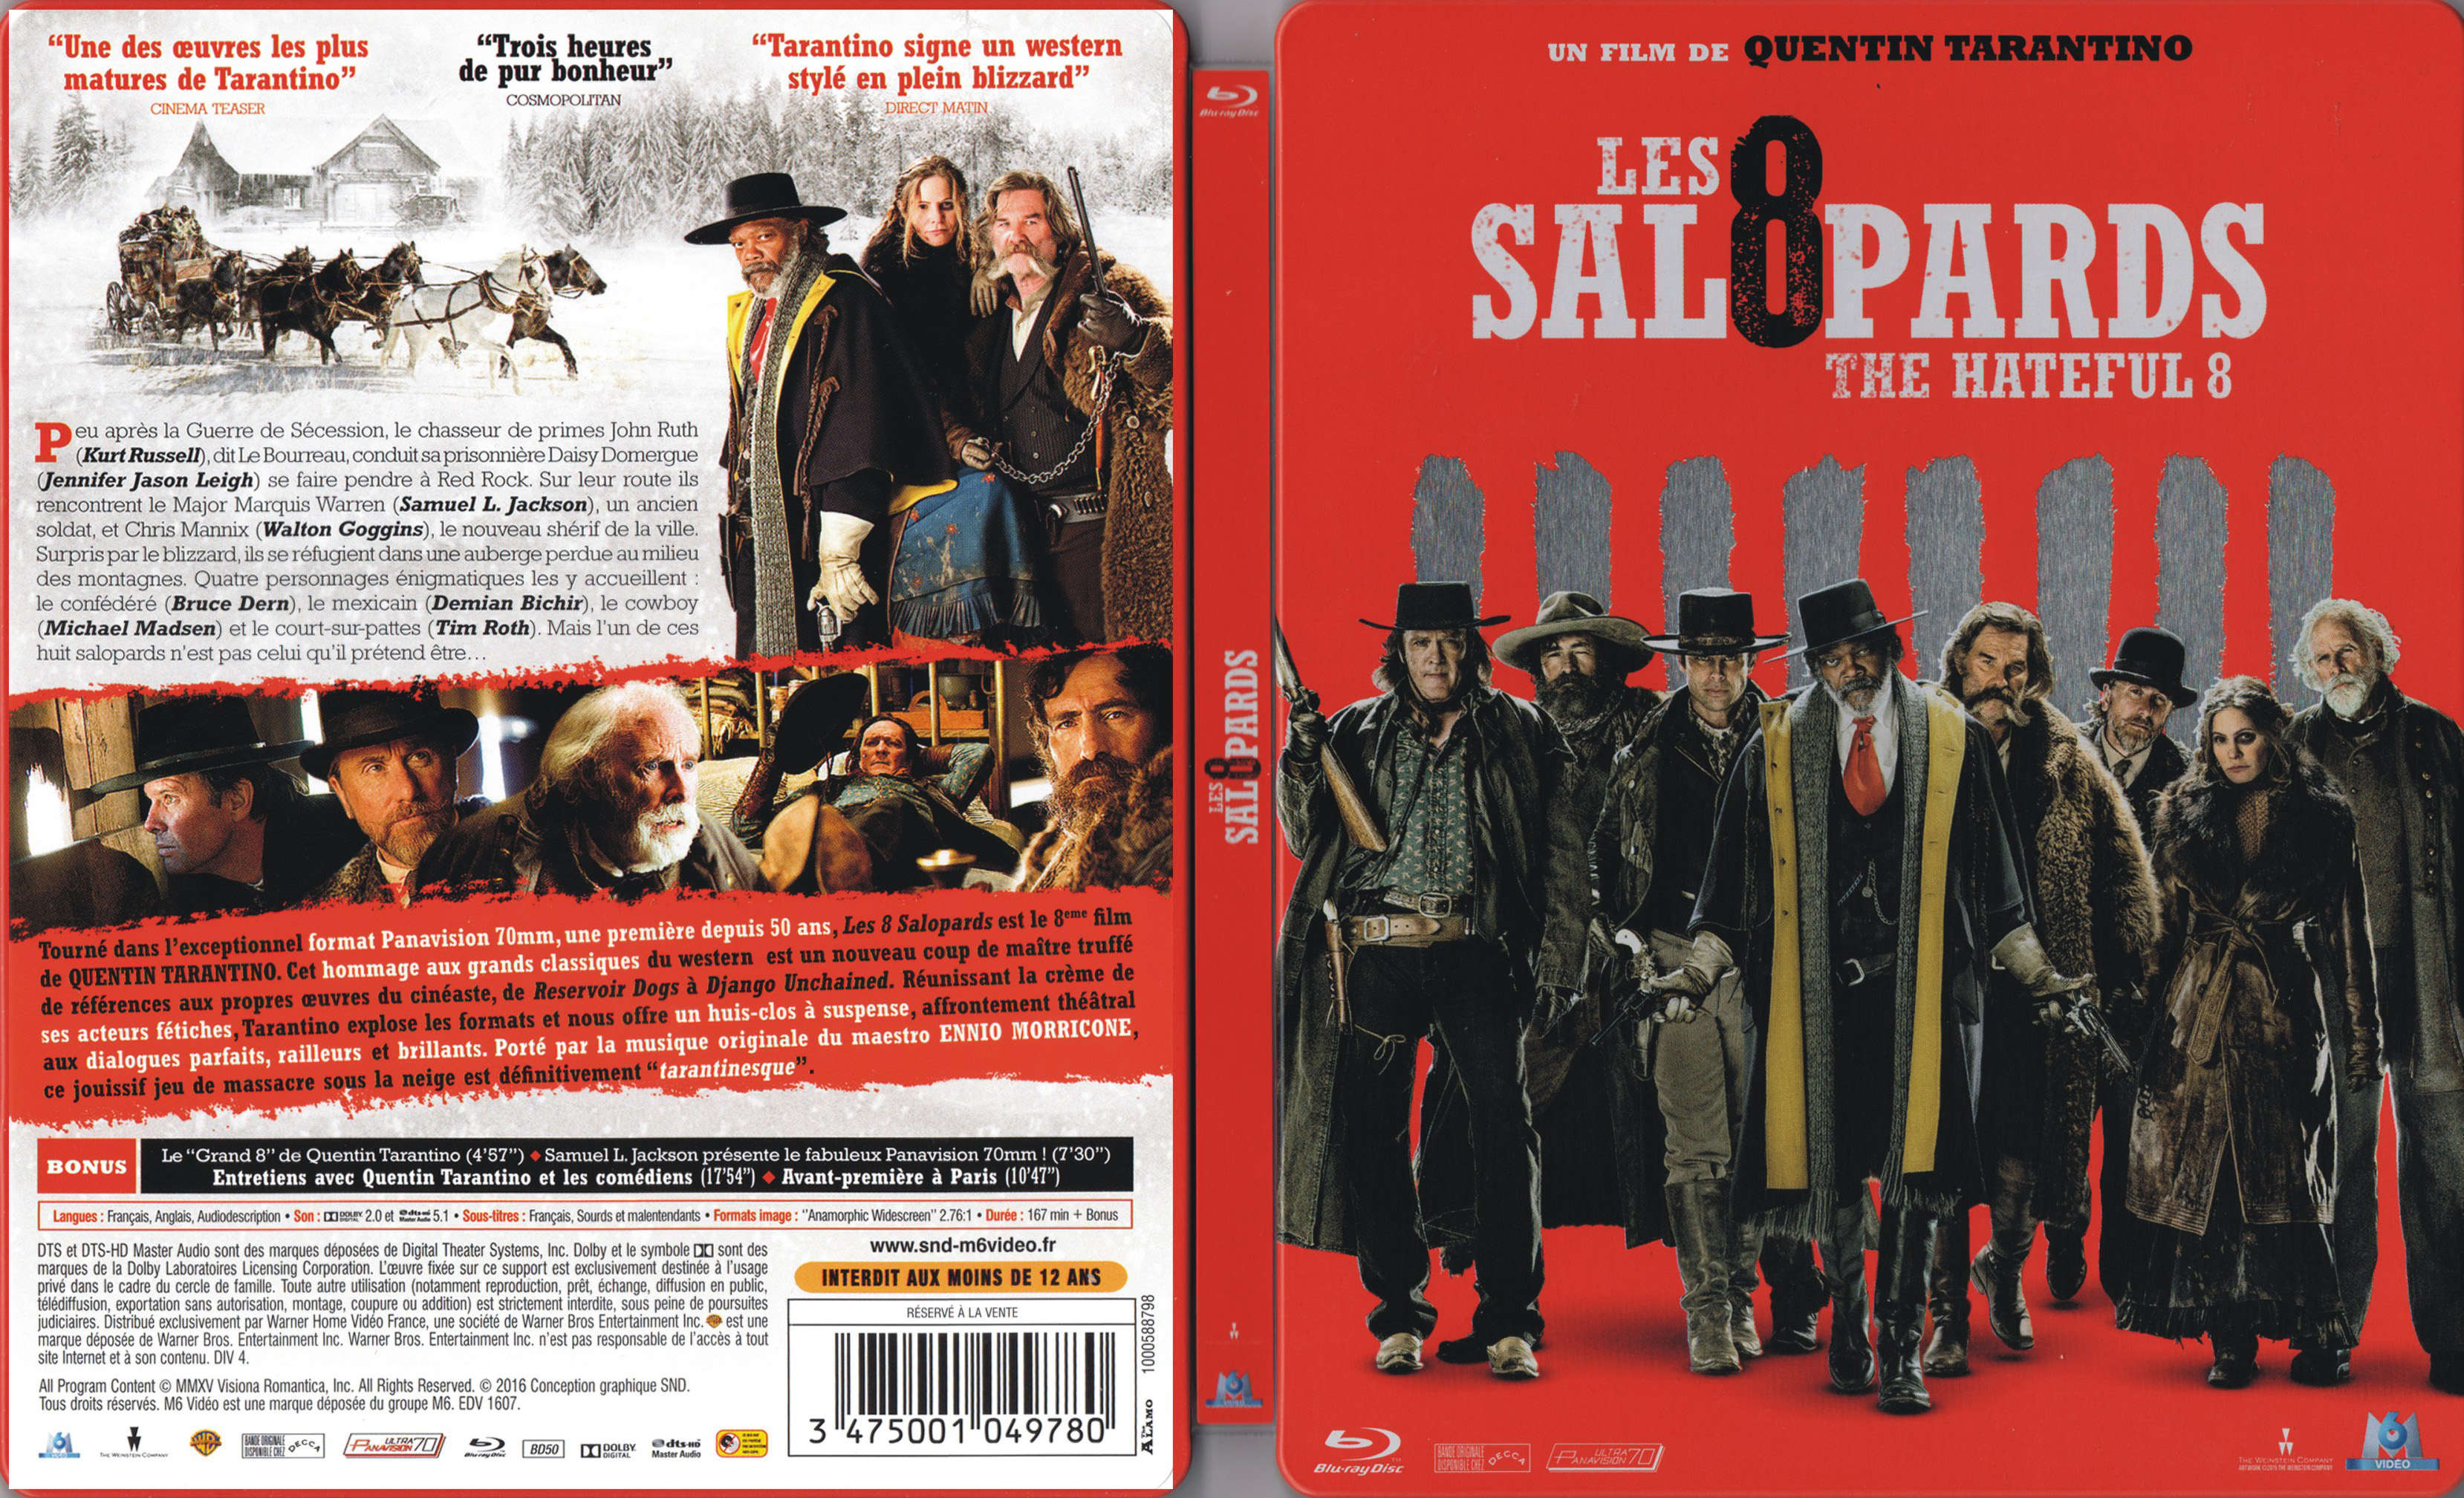 Jaquette DVD Les Huit salopards (BLU-RAY) v2